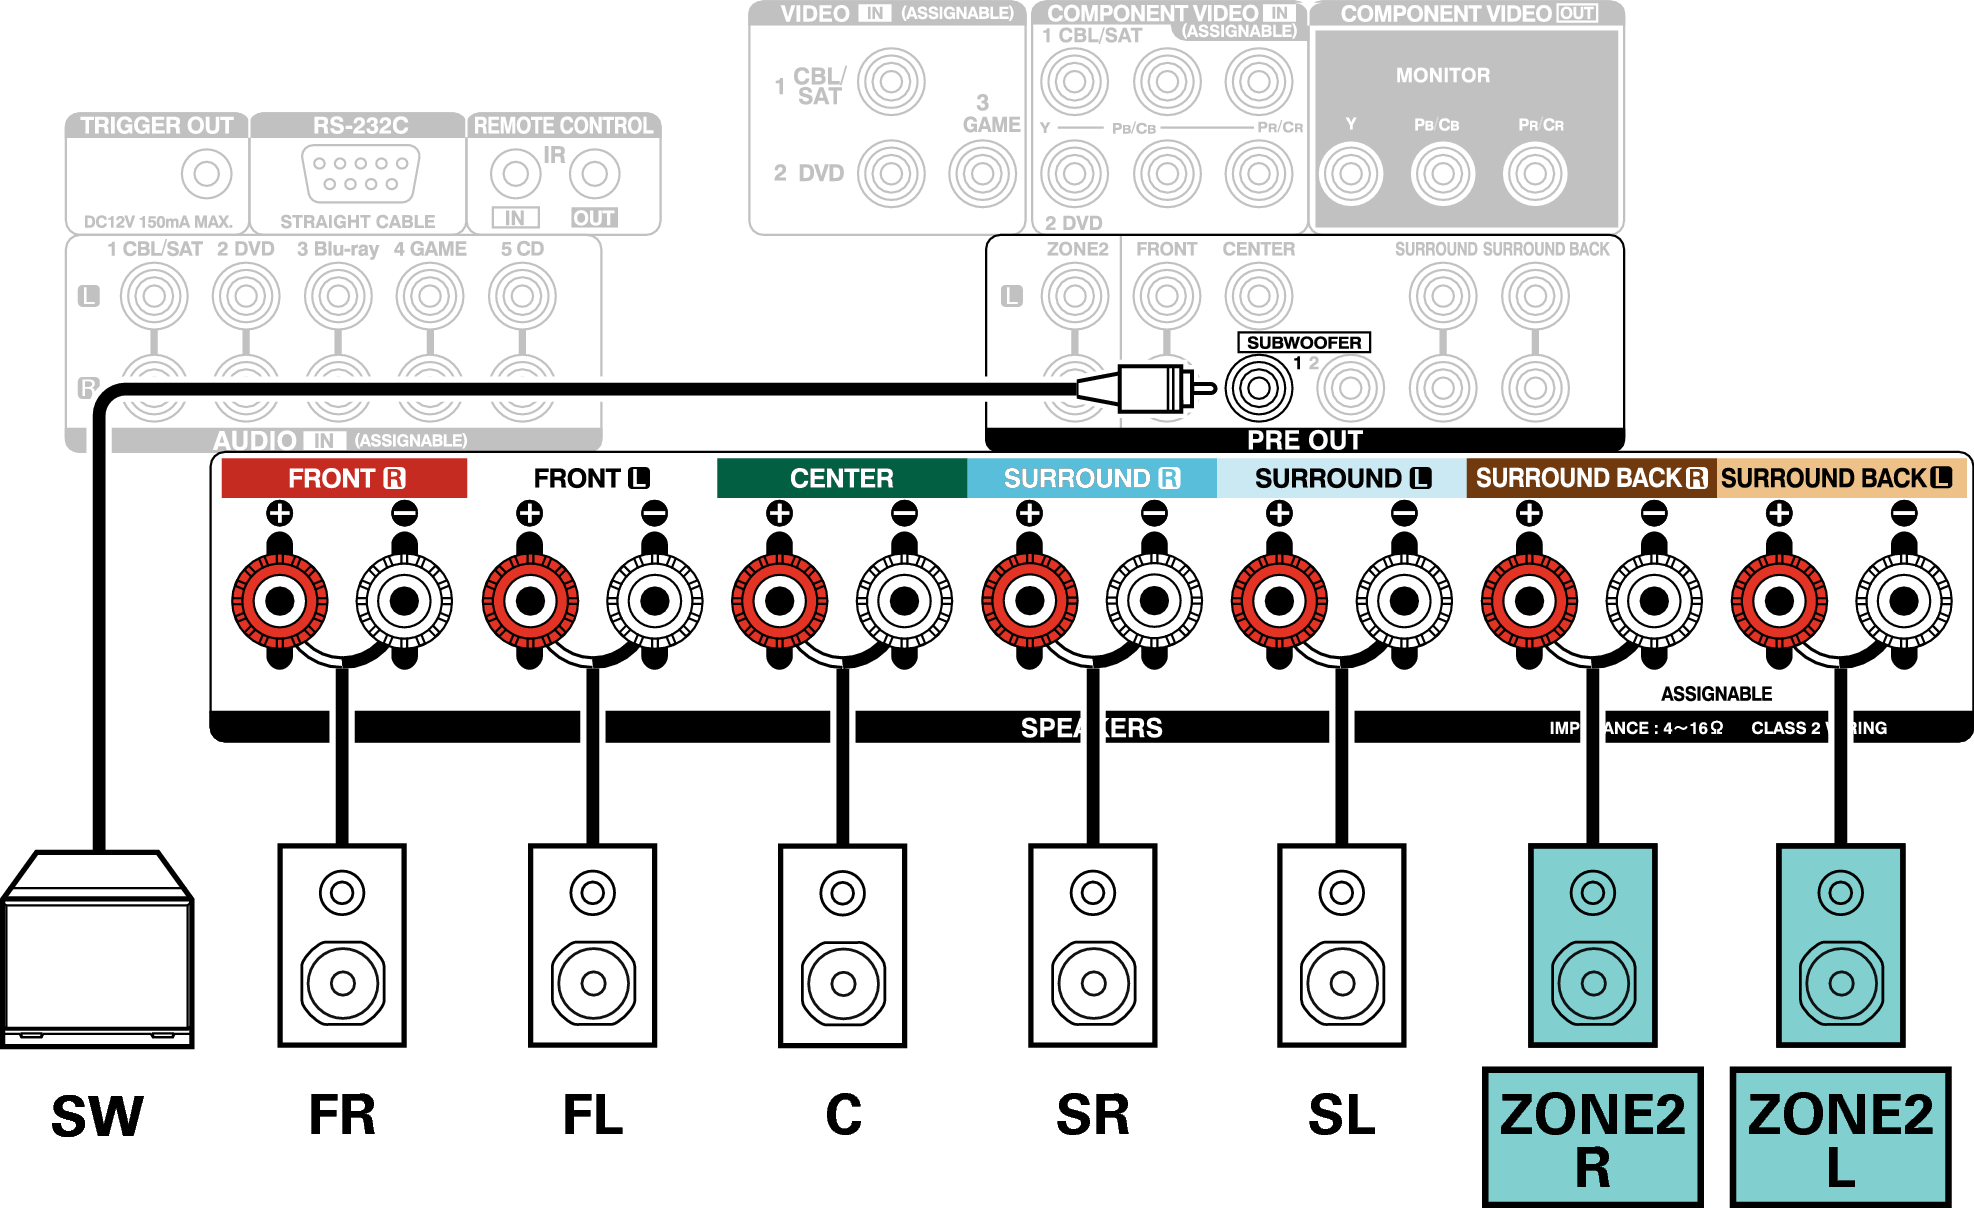 Conne SP 5.1 ZONE2 AVRX3100WE3